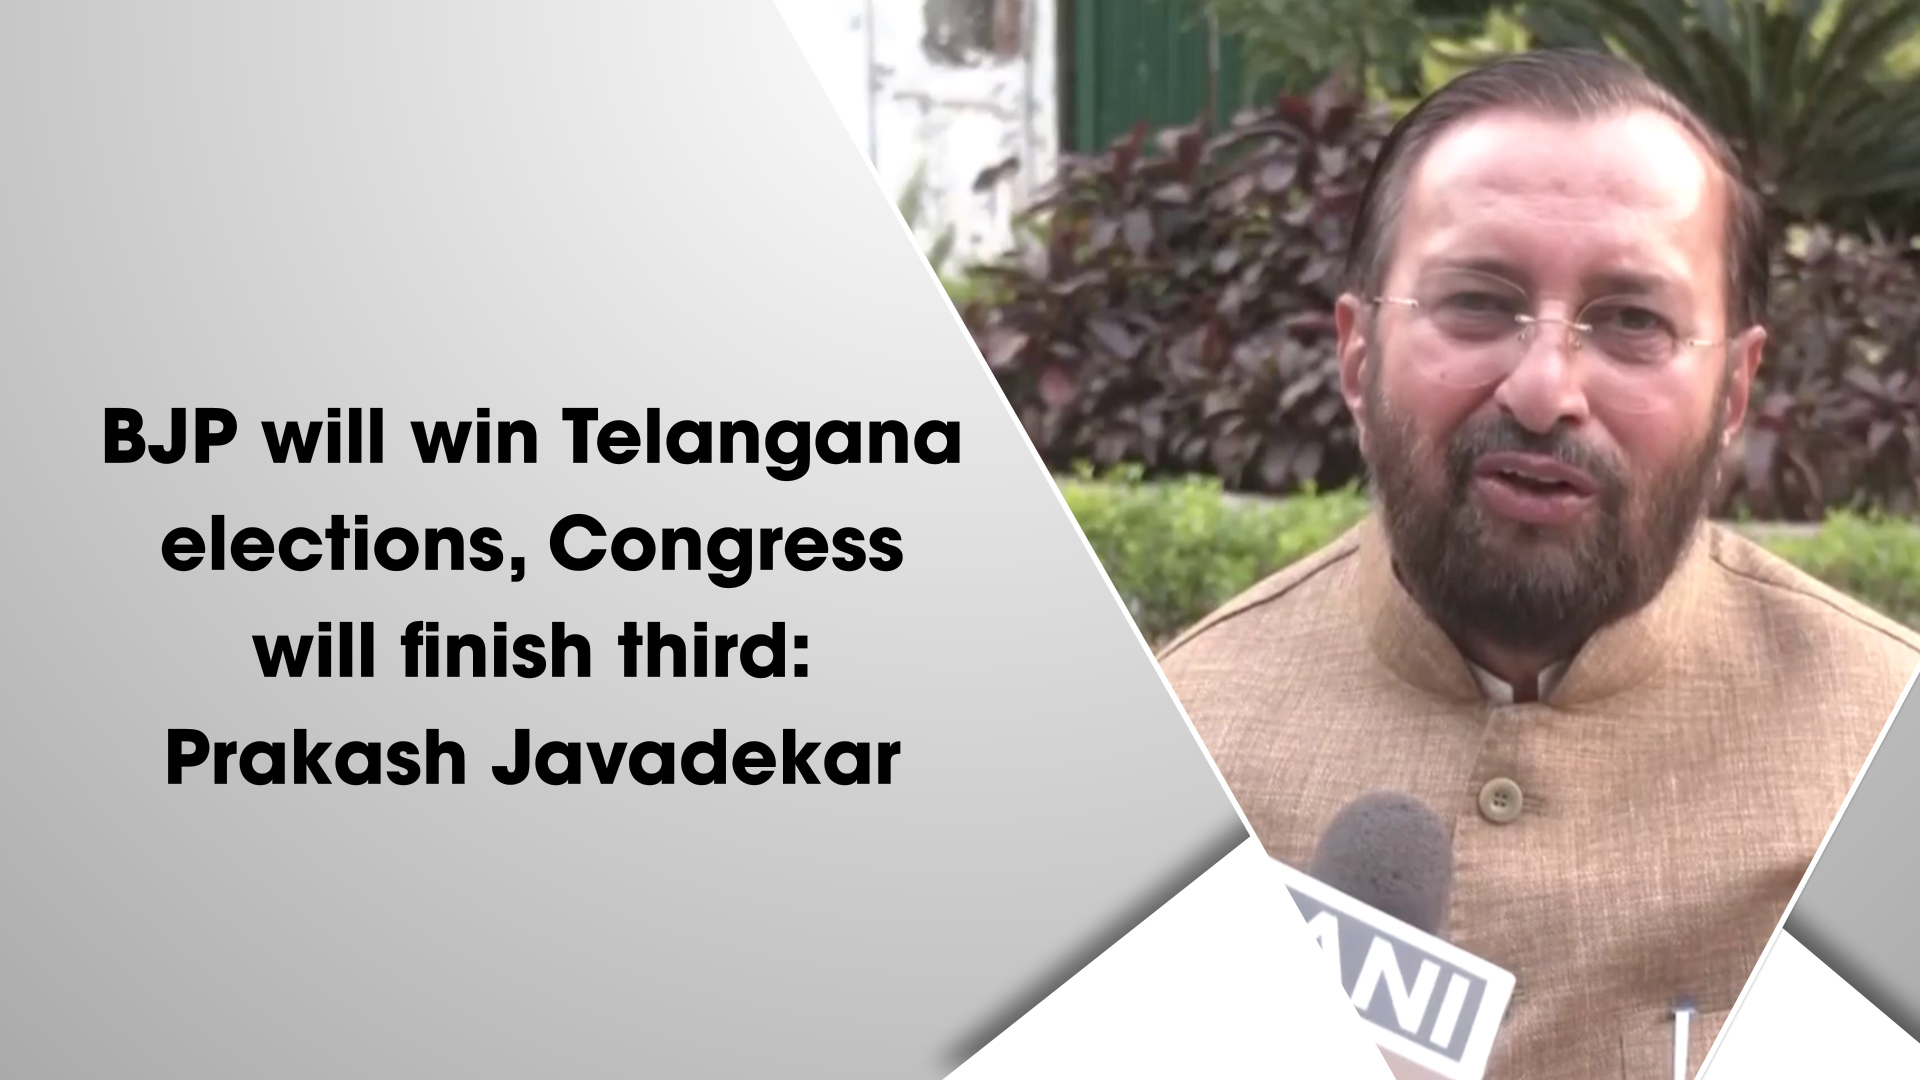 BJP will win Telangana elections, Congress will finish third Prakash Javadekar